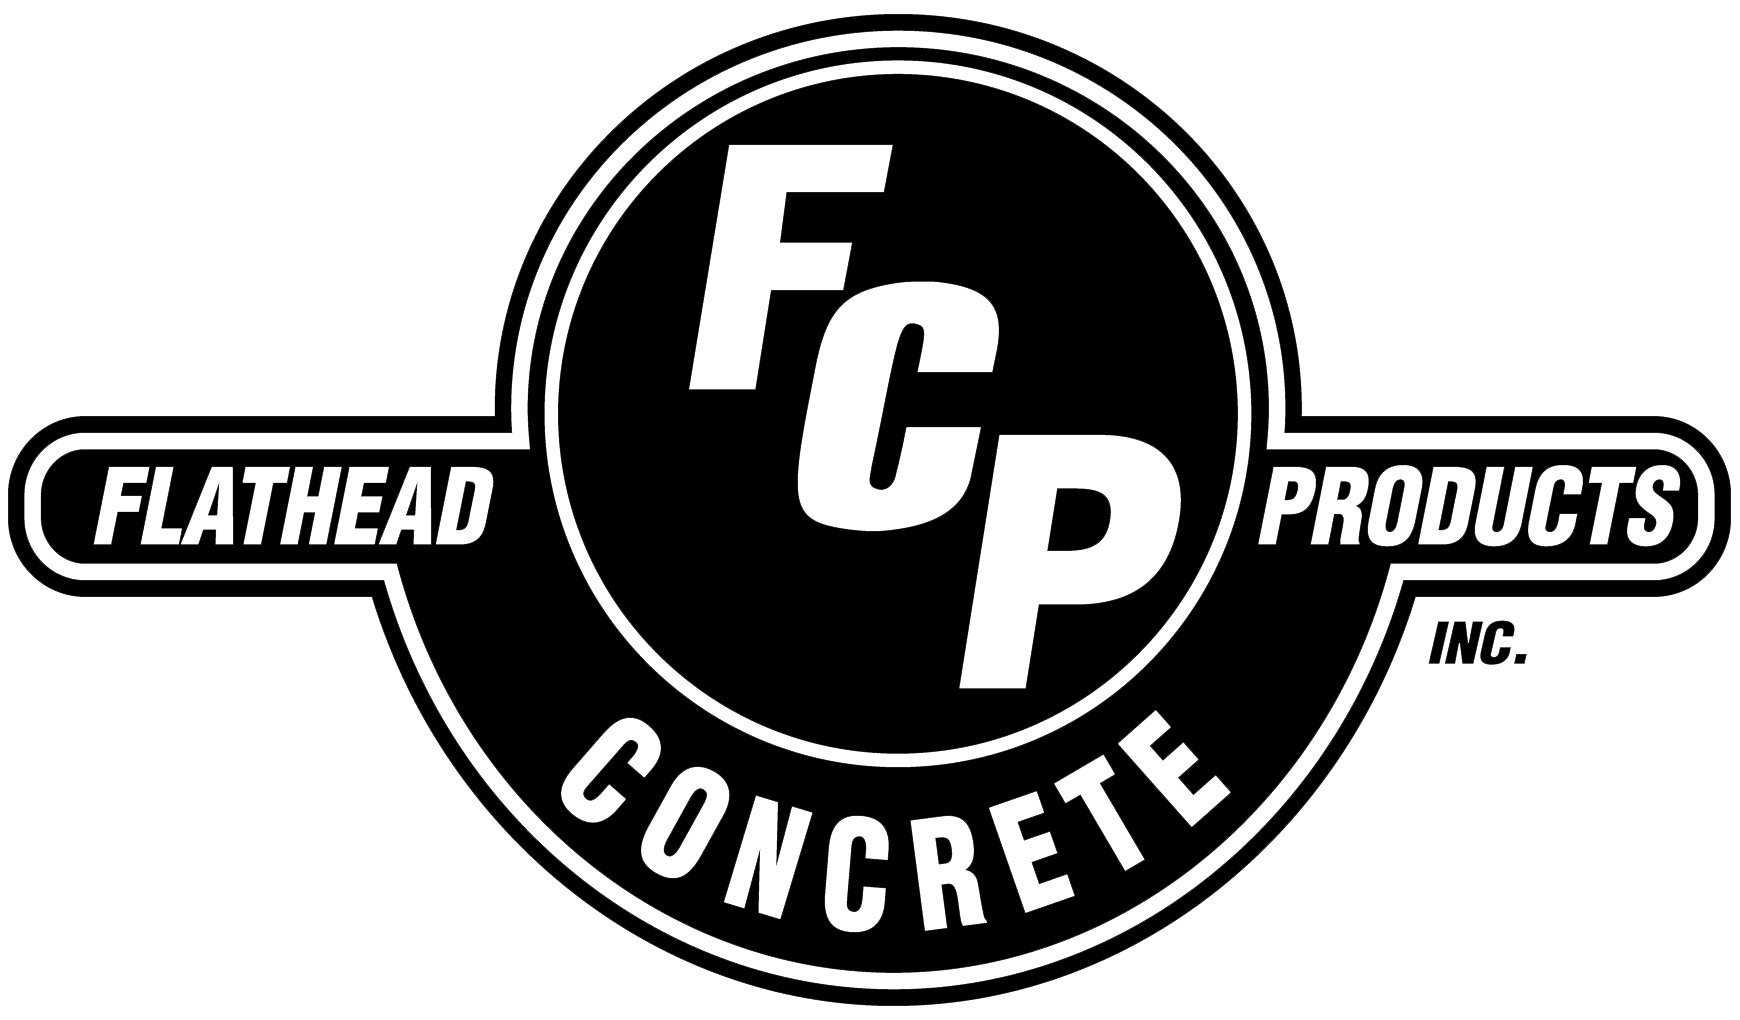 Flathead Concrete Products